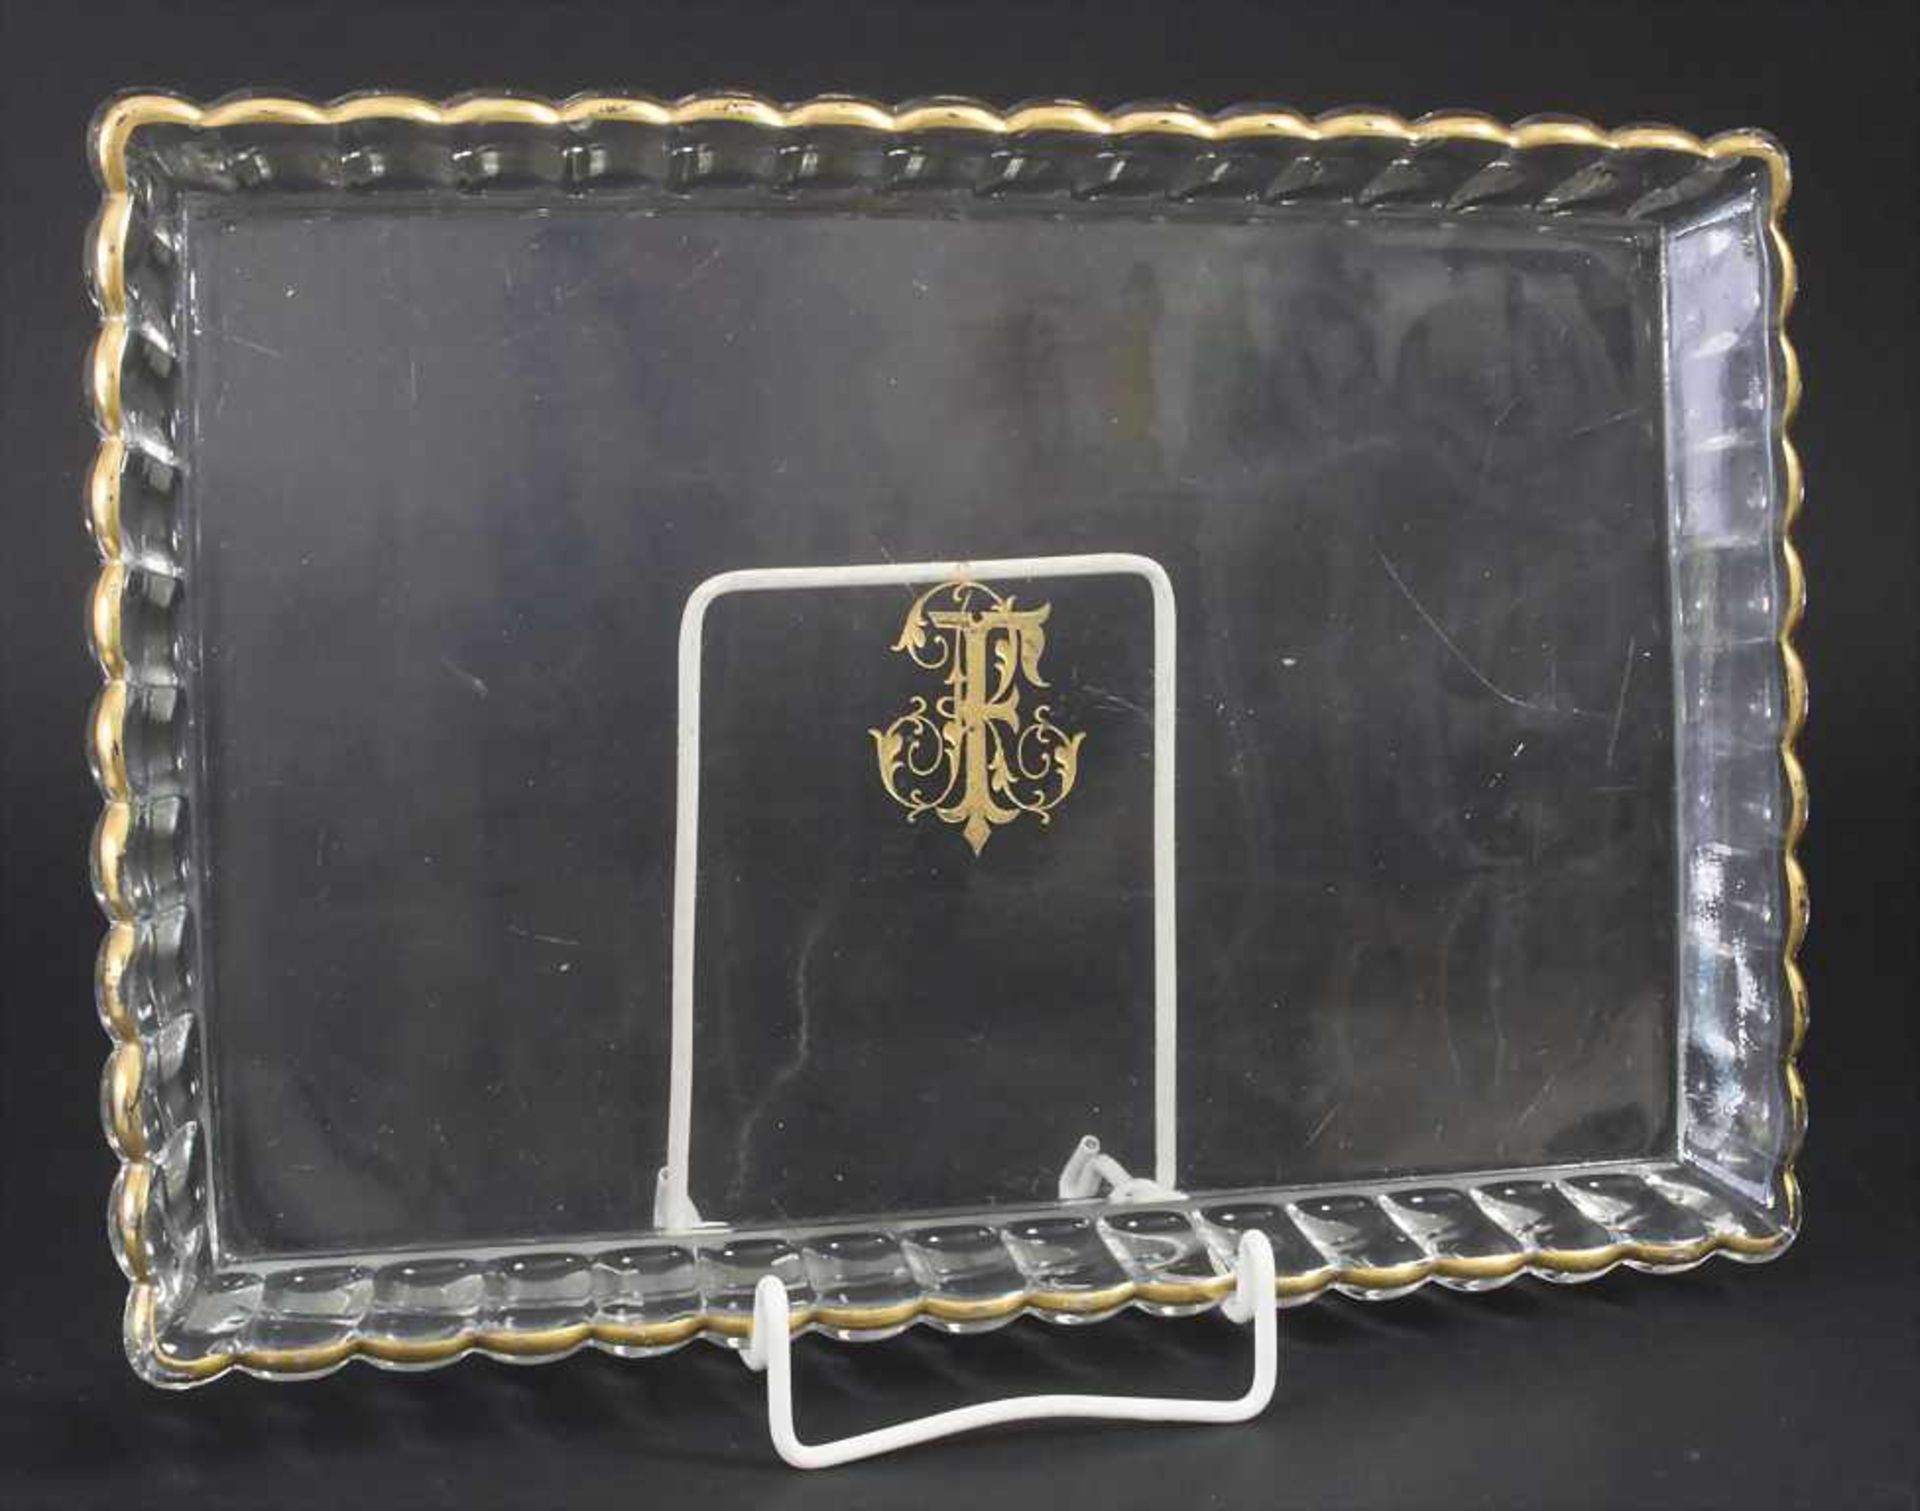 Rechteckiges Glastablett / A rectangular crystal glass tray, Cristallérie de Baccarat, Nancy, Ende